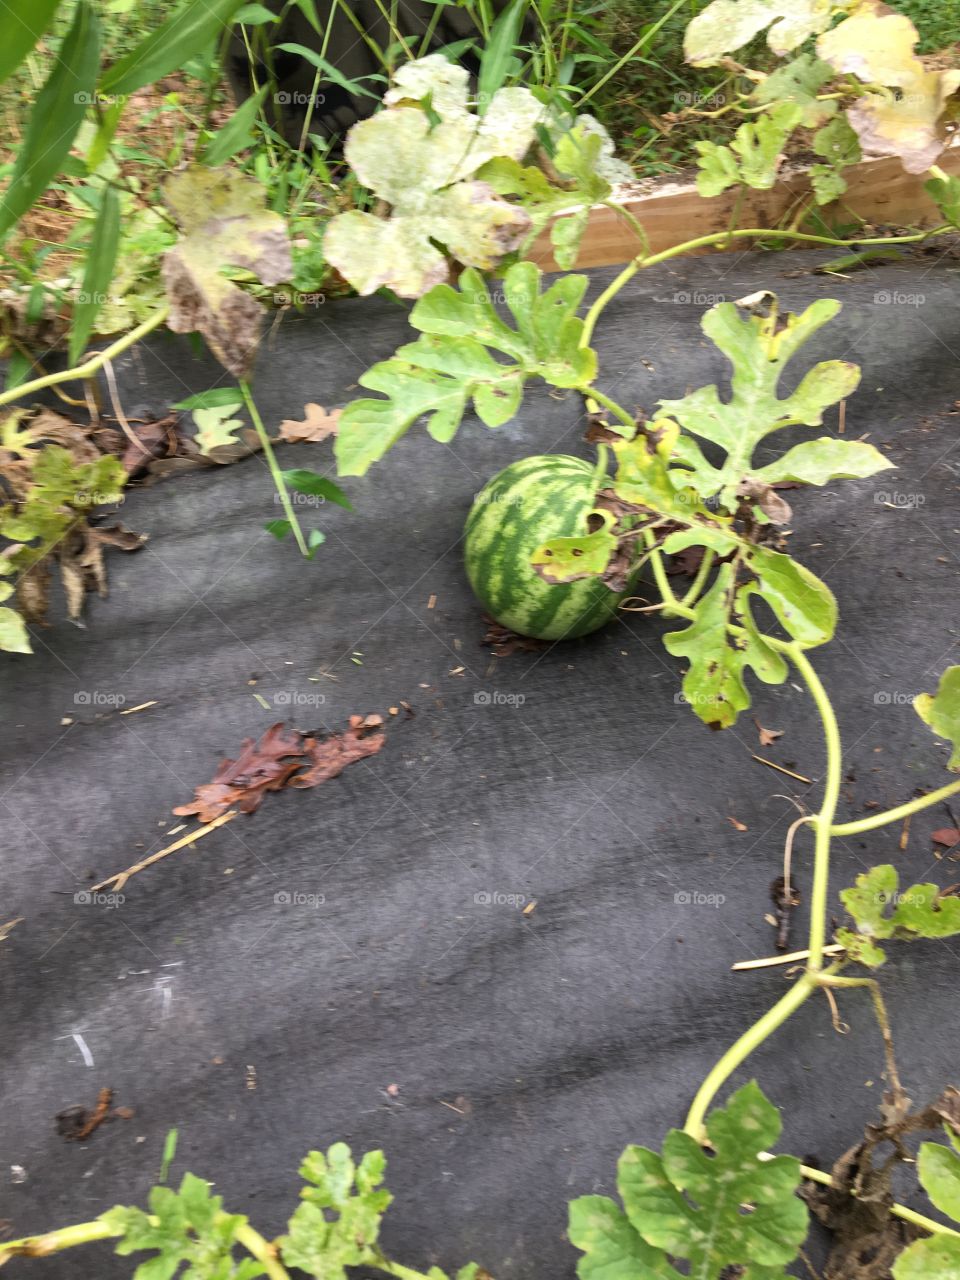 Watermelon on the vine